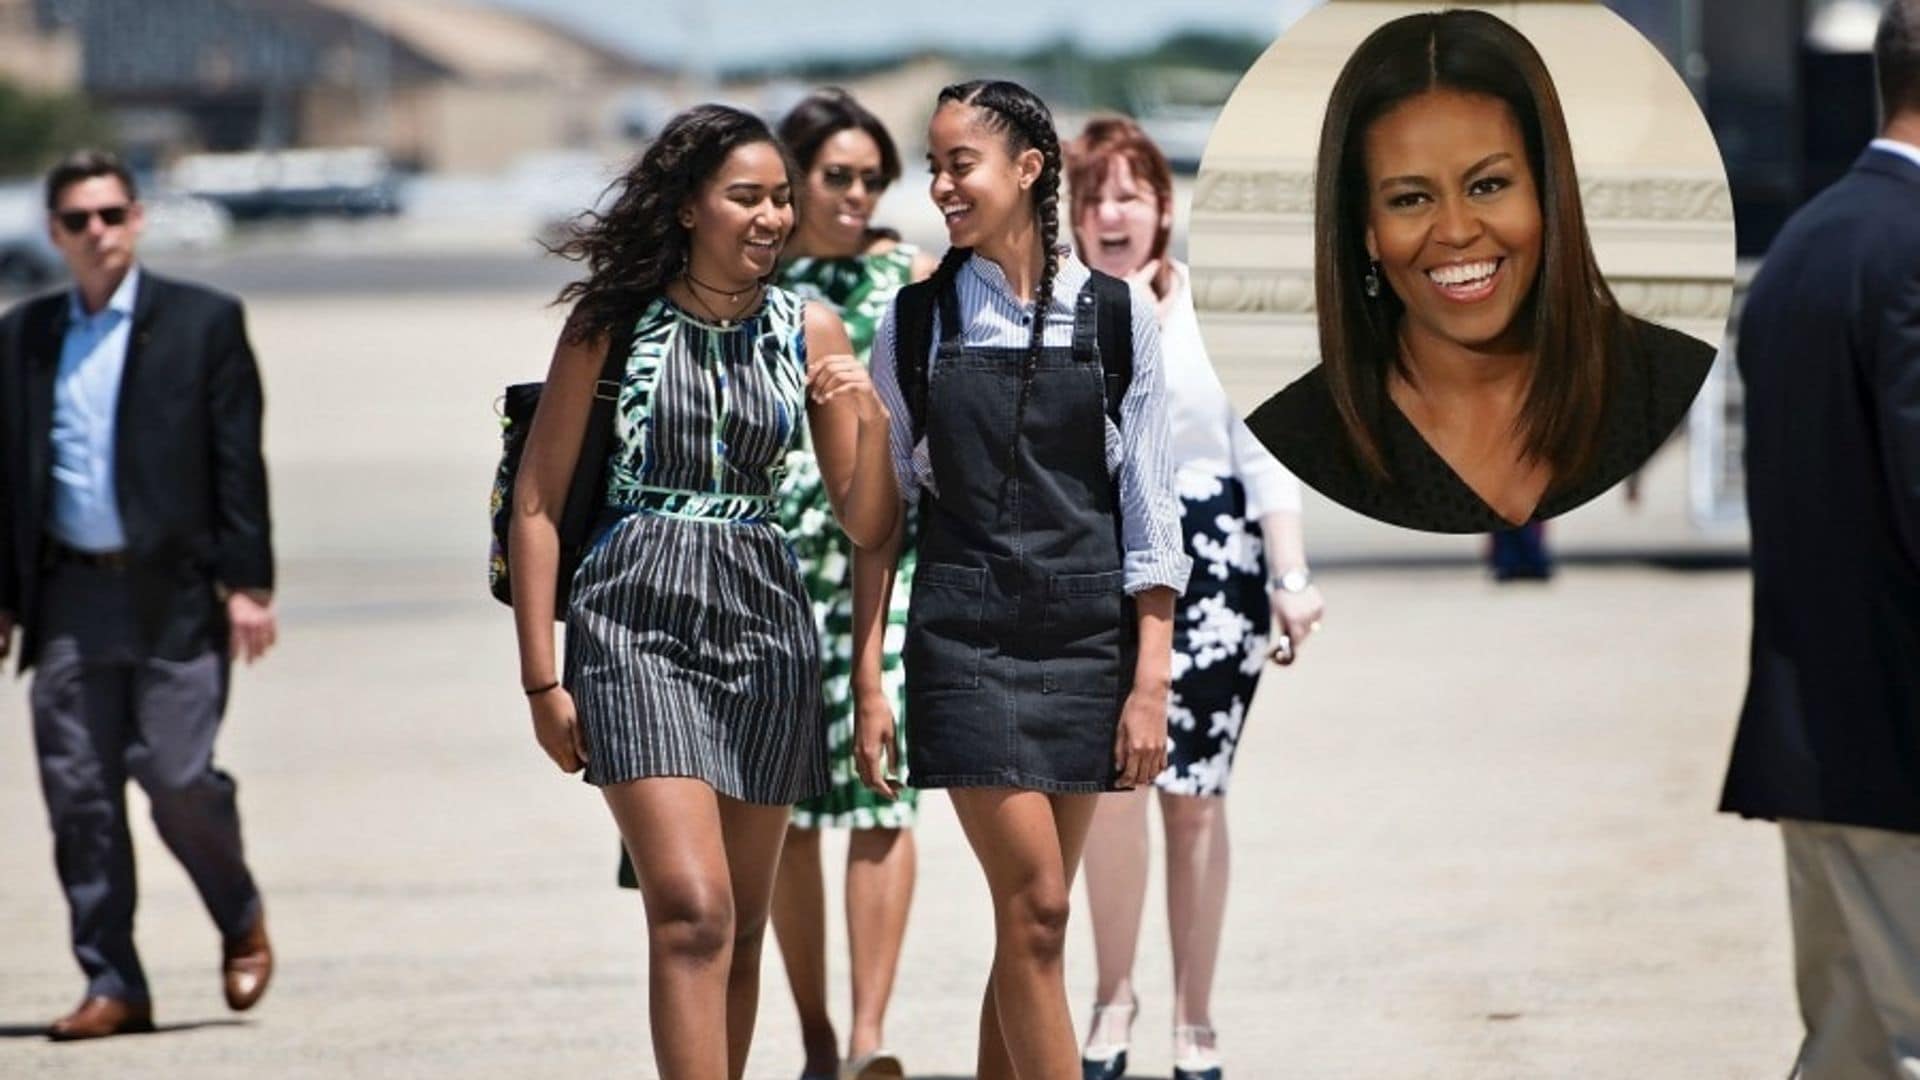 Michelle Obama on Malia and Sasha's post-White House adjustment